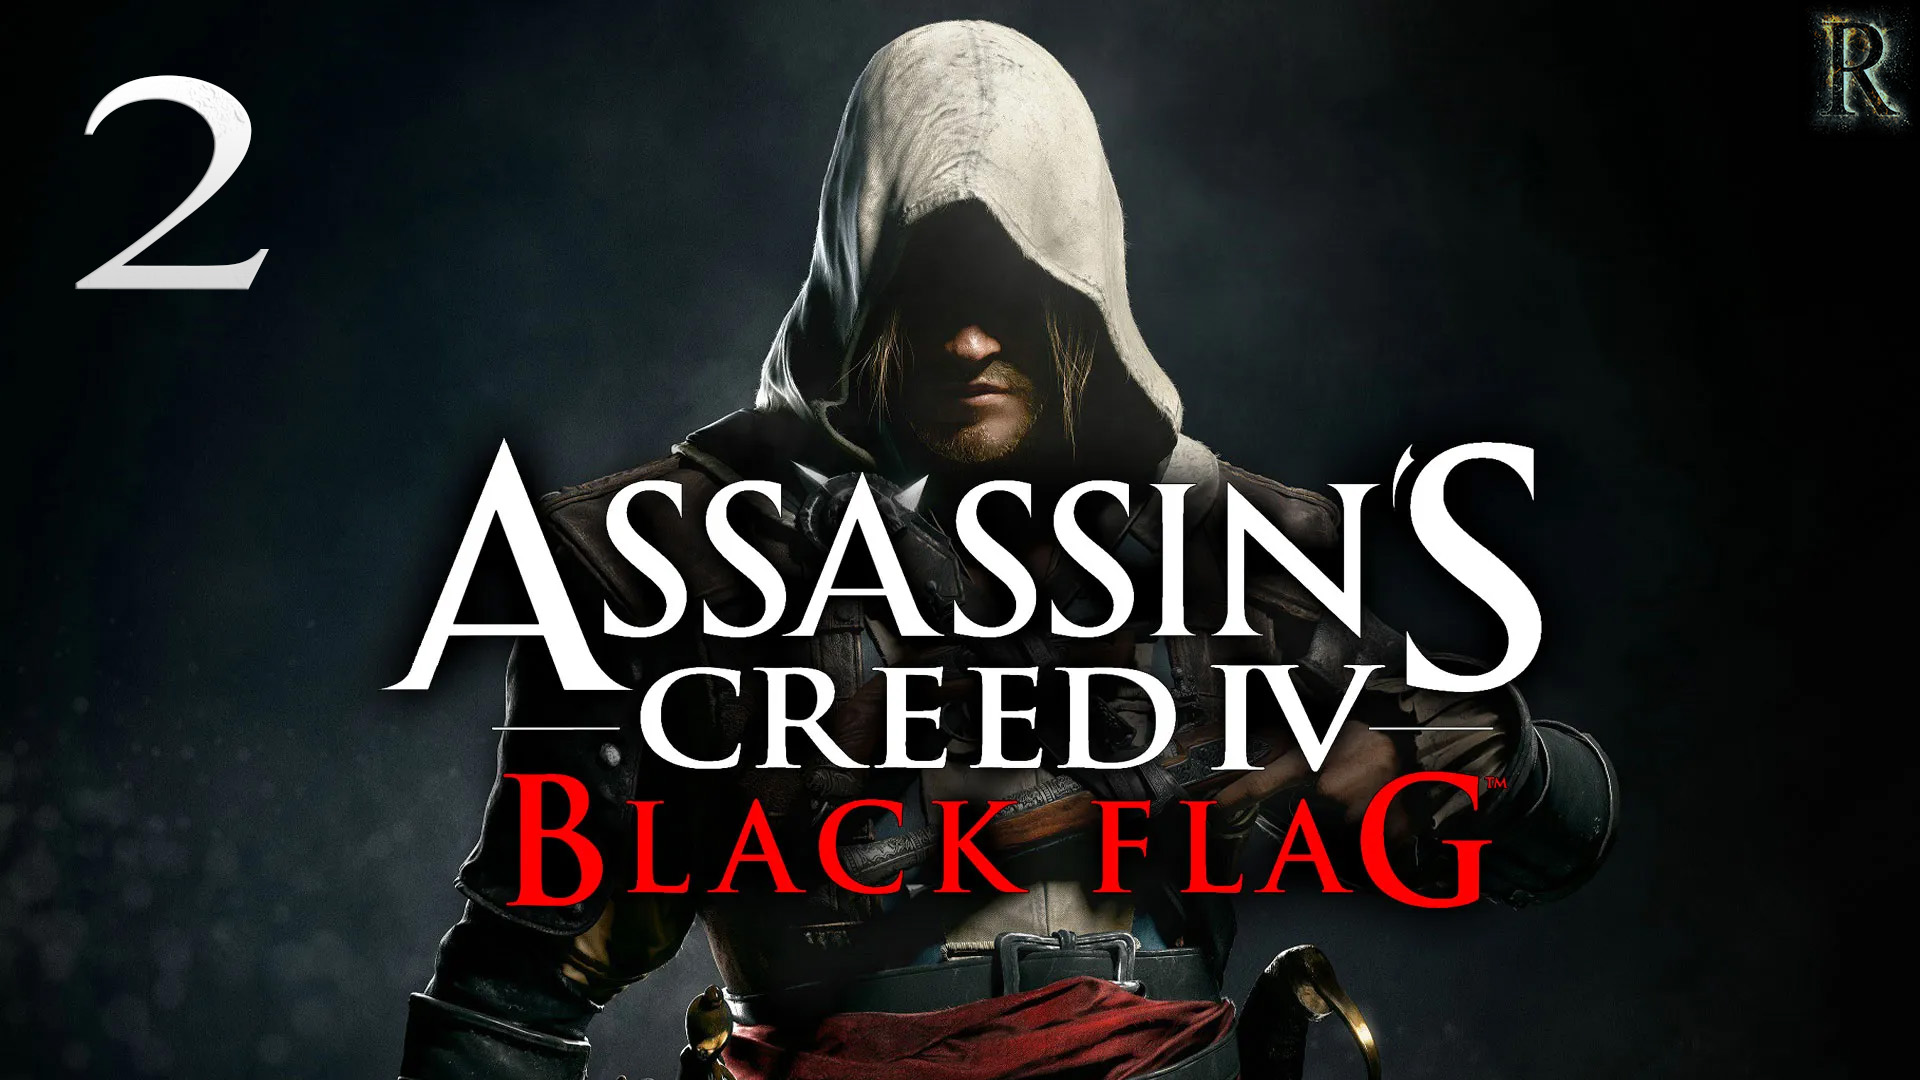 Assassin's Creed IV Black Flag -  2 серия. (А как же мой сахар? / Господин Уолпол, я полагаю?)